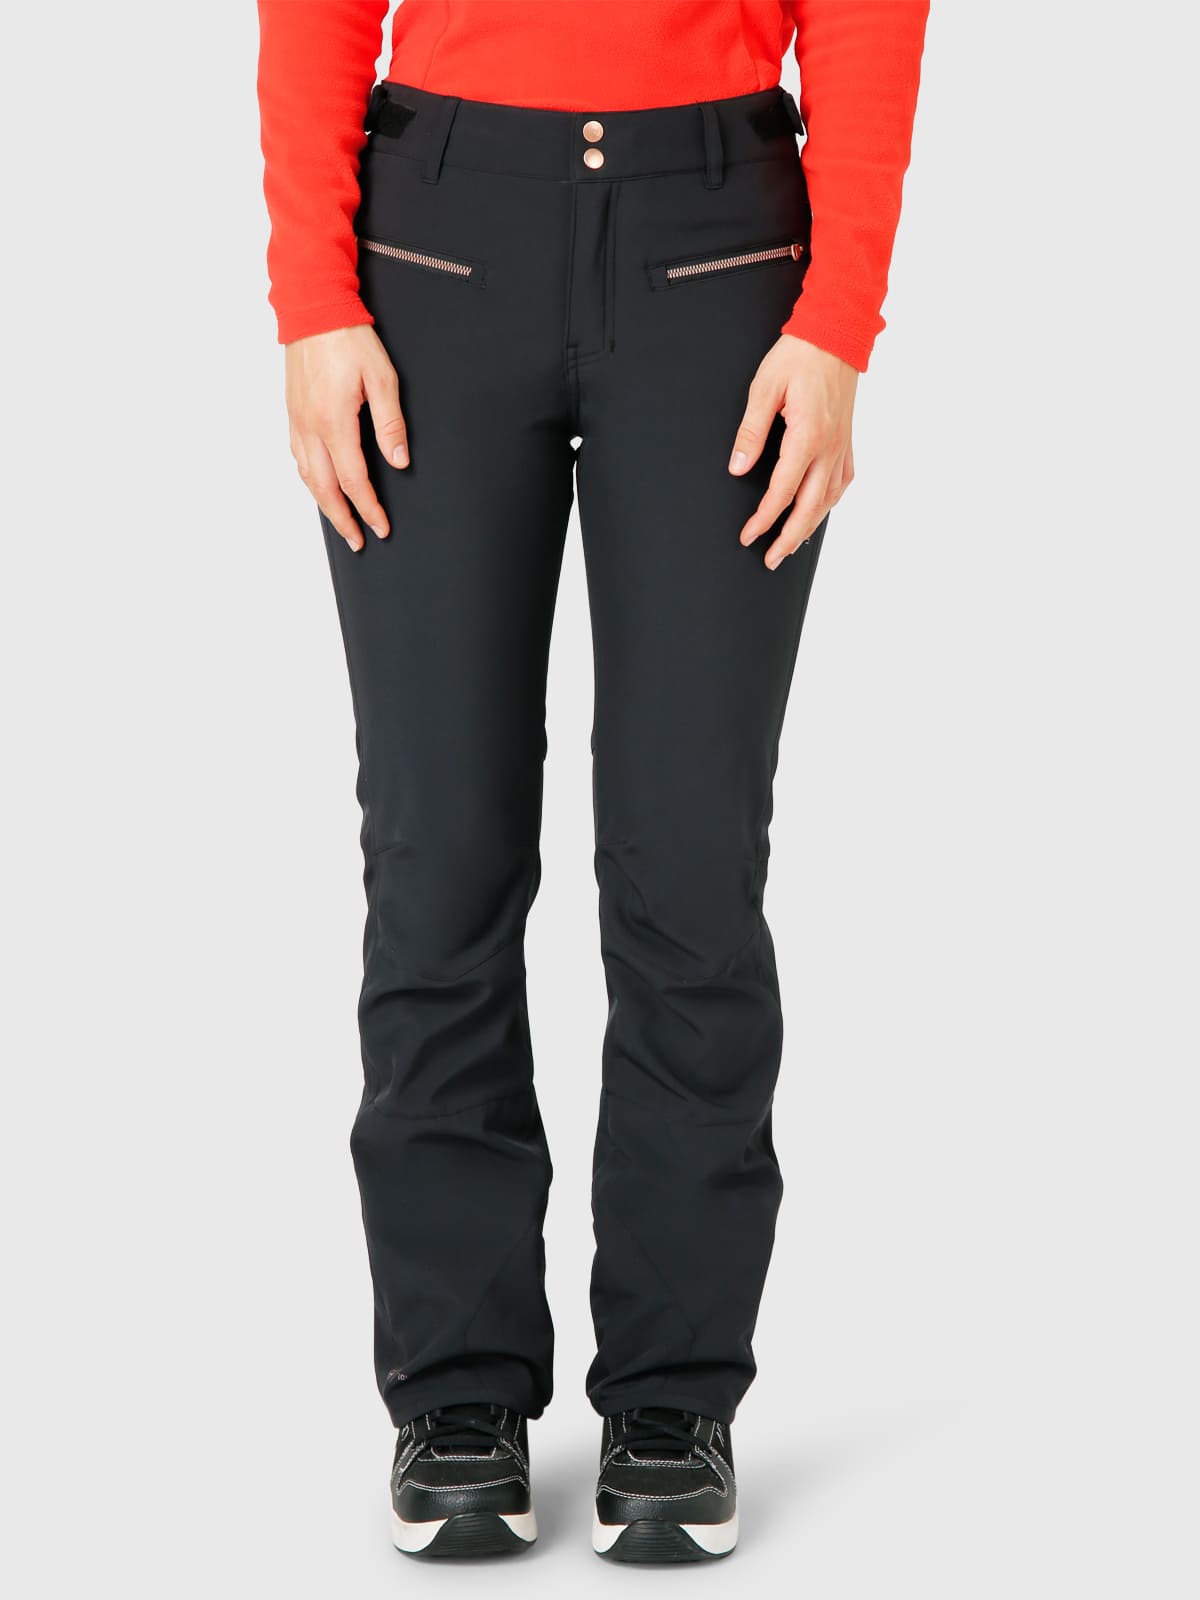 Brunotti Silverlake 10K Ski Pants Womens Select colour/ size